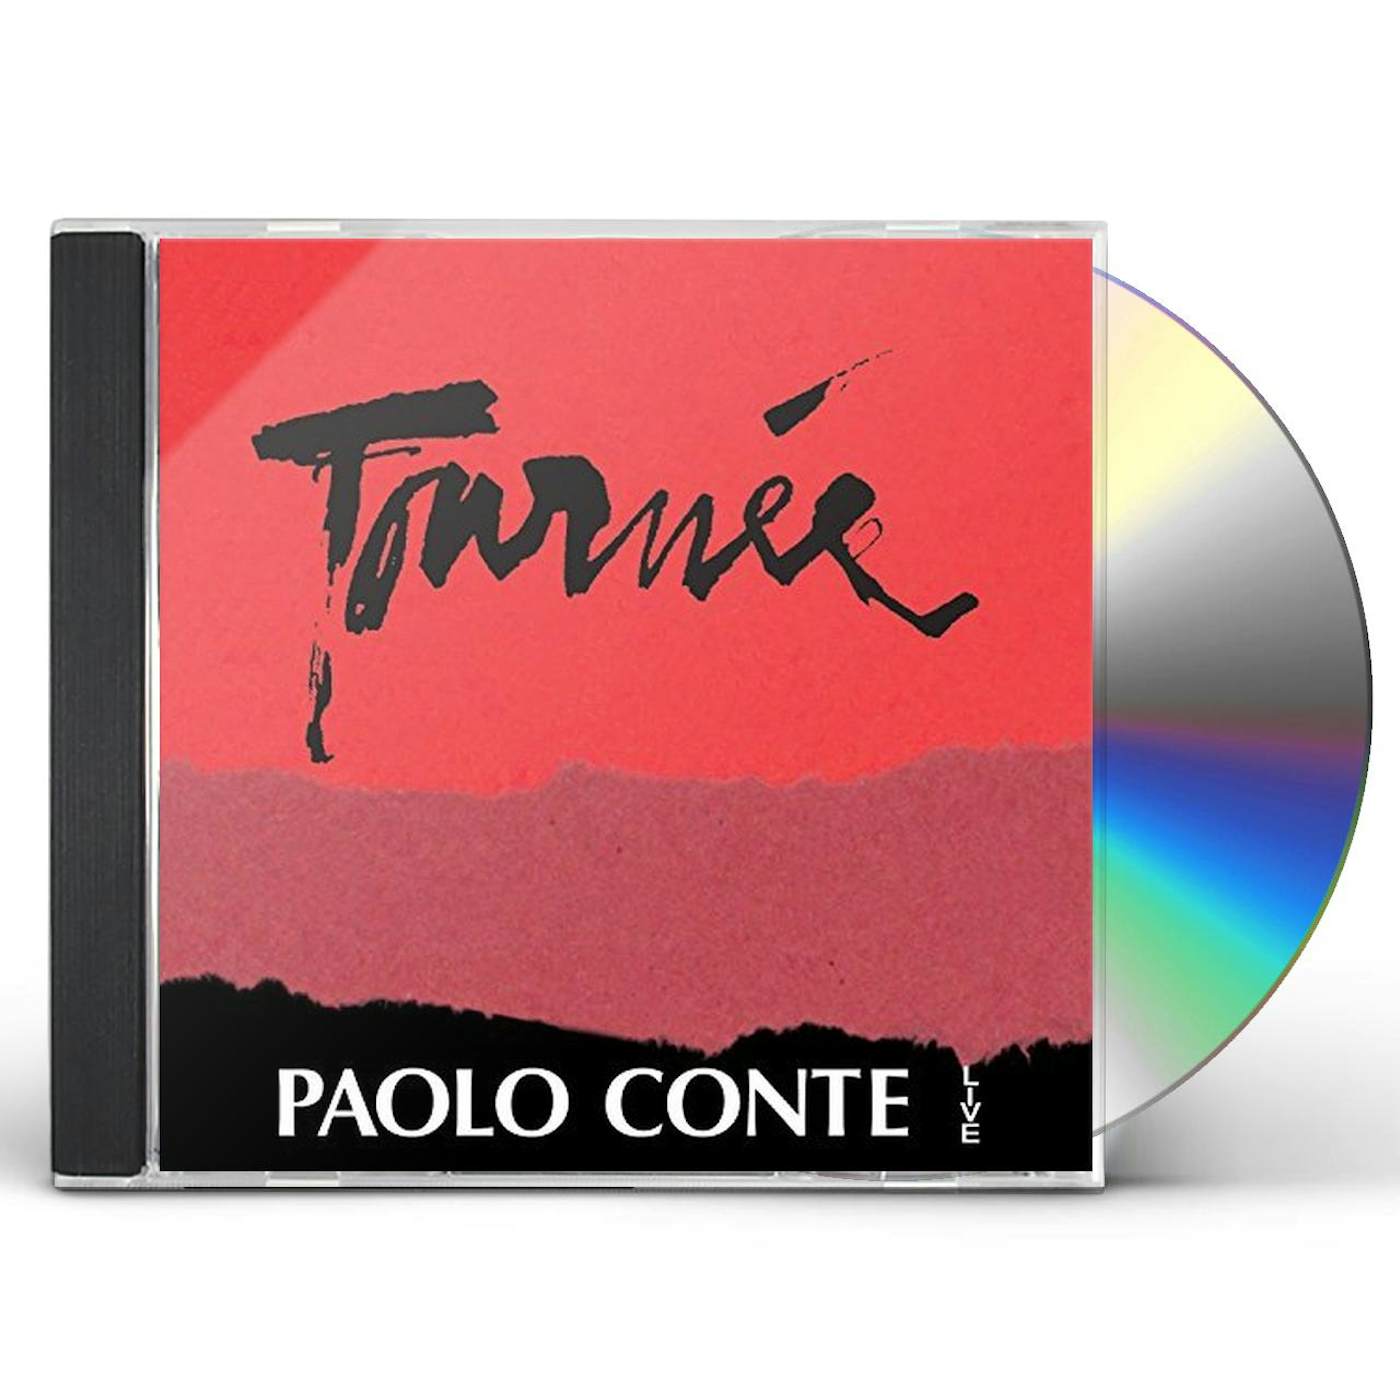 Paolo Conte TOURNEE CD